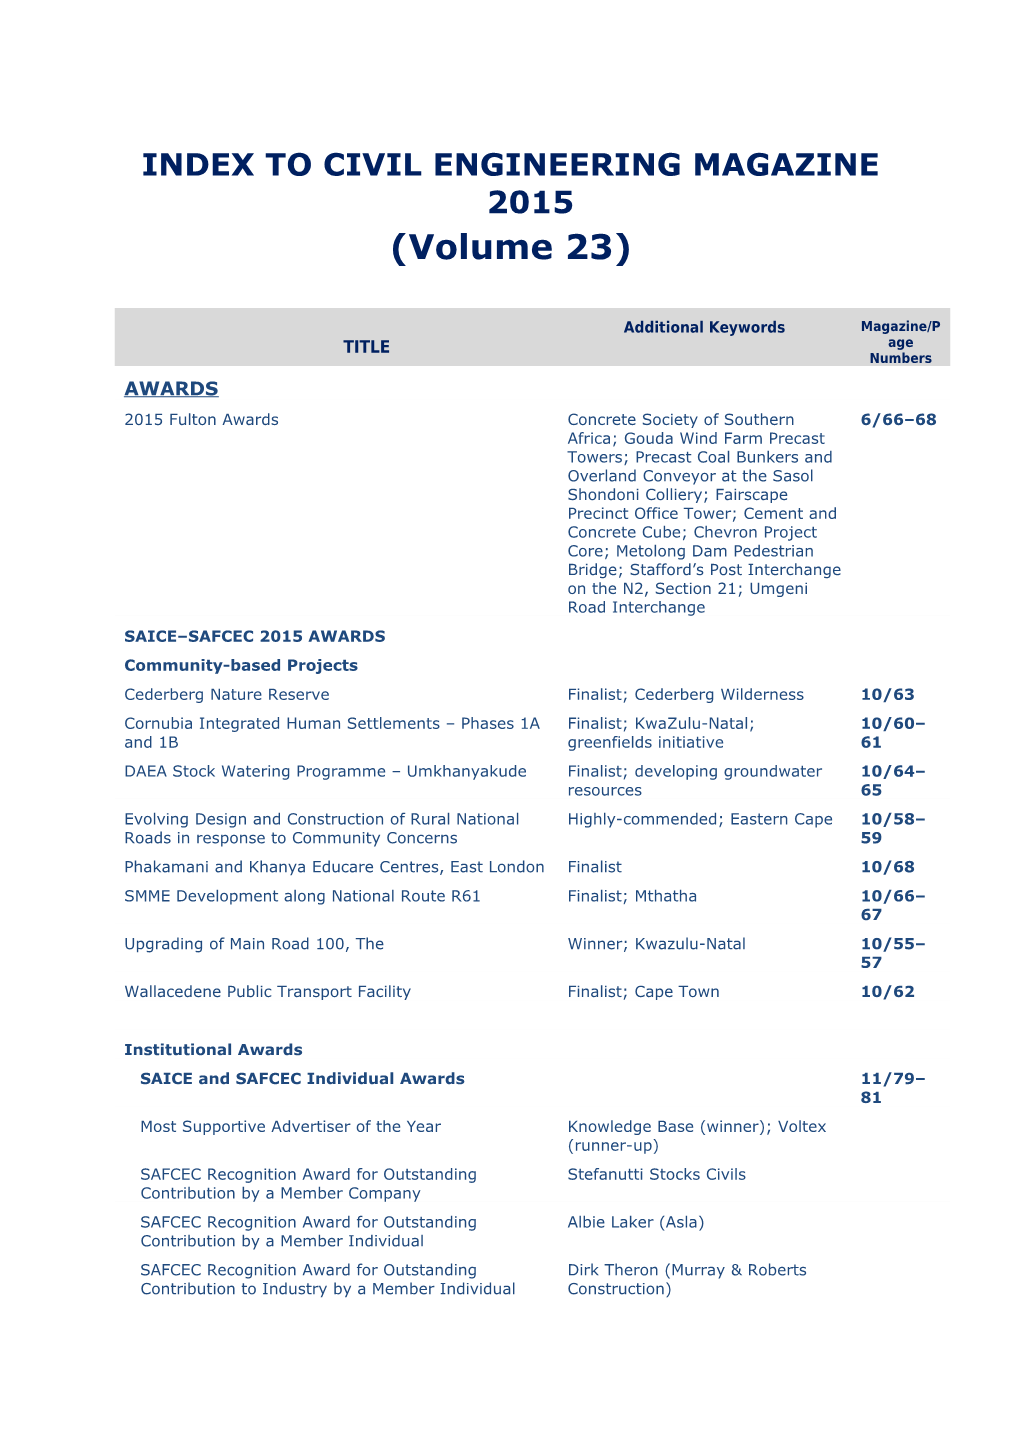 Index to Civil Engineering Magazine 2015